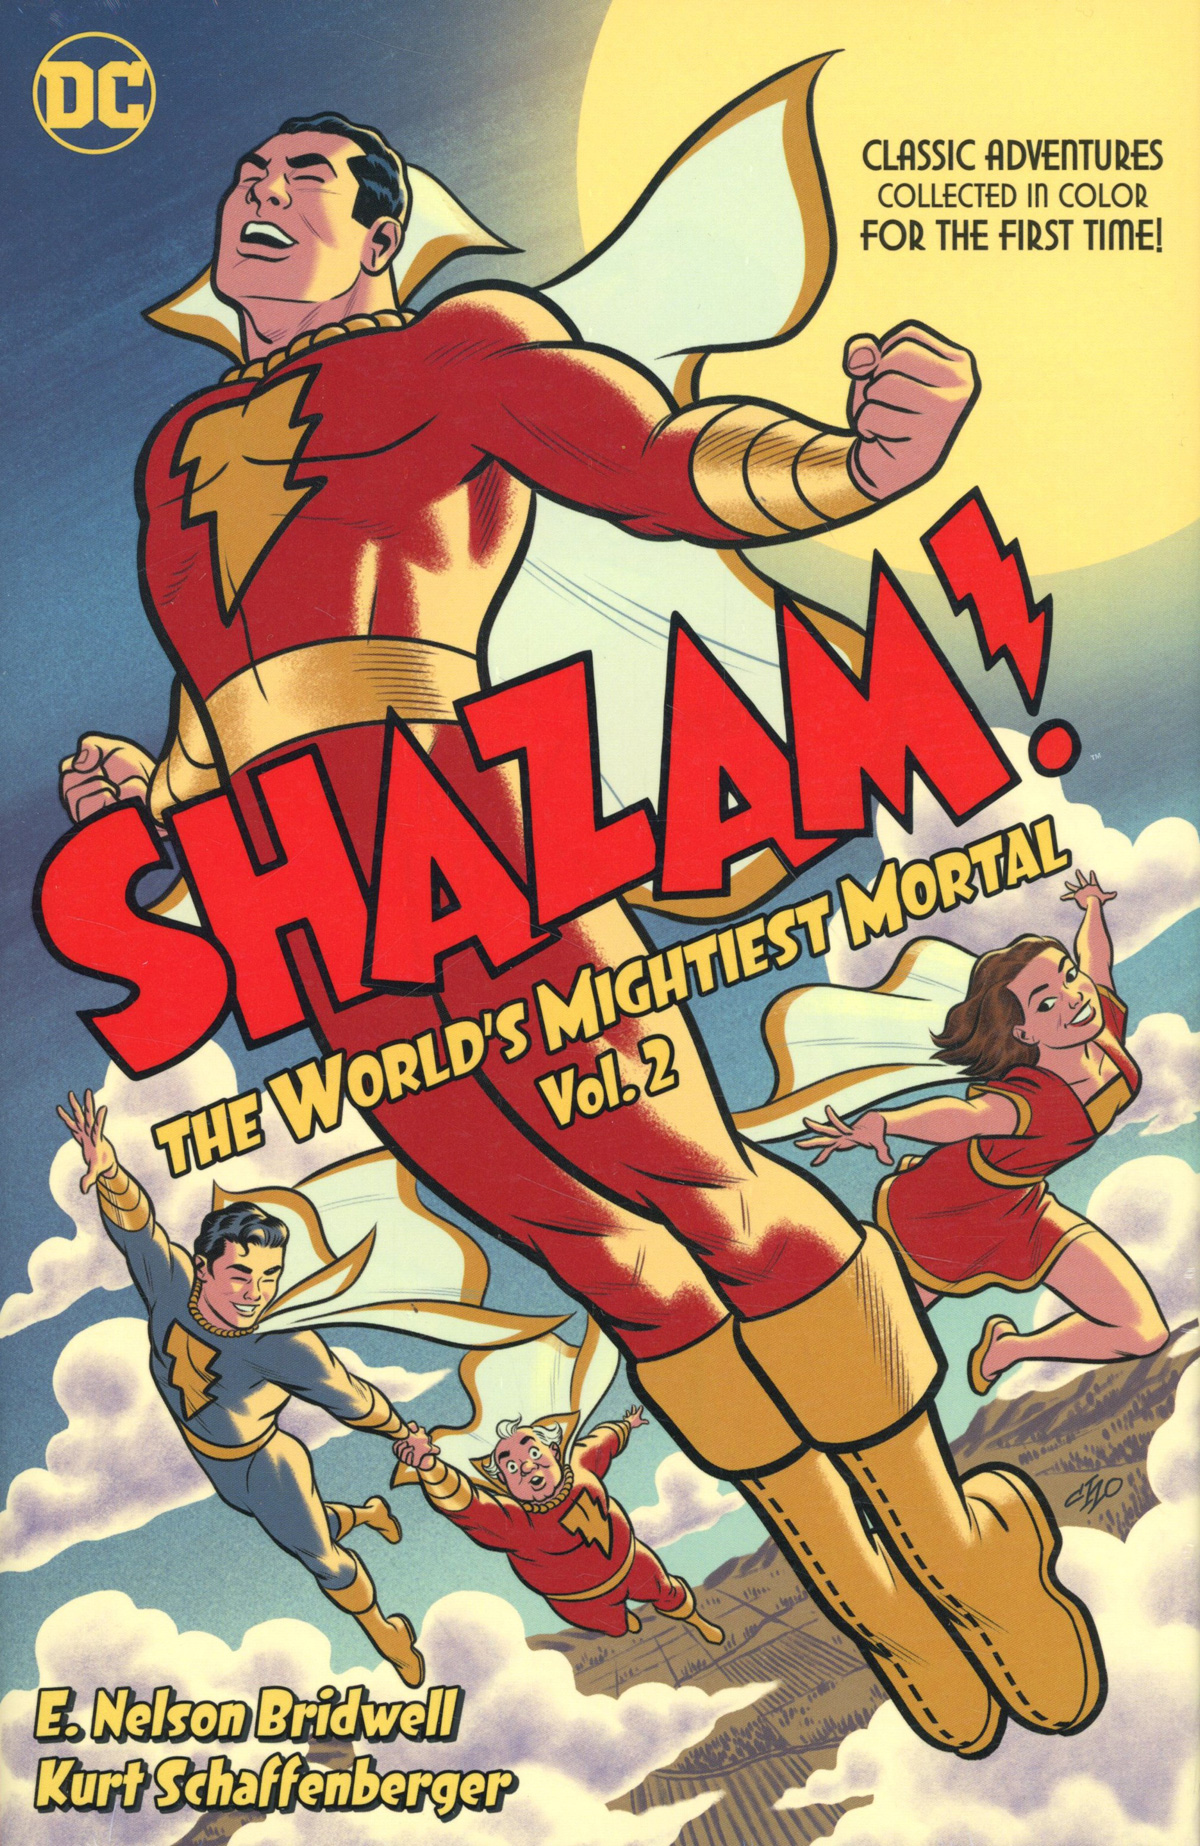 SHAZAM The Worlds Mightiest Mortal Vol 2 HC